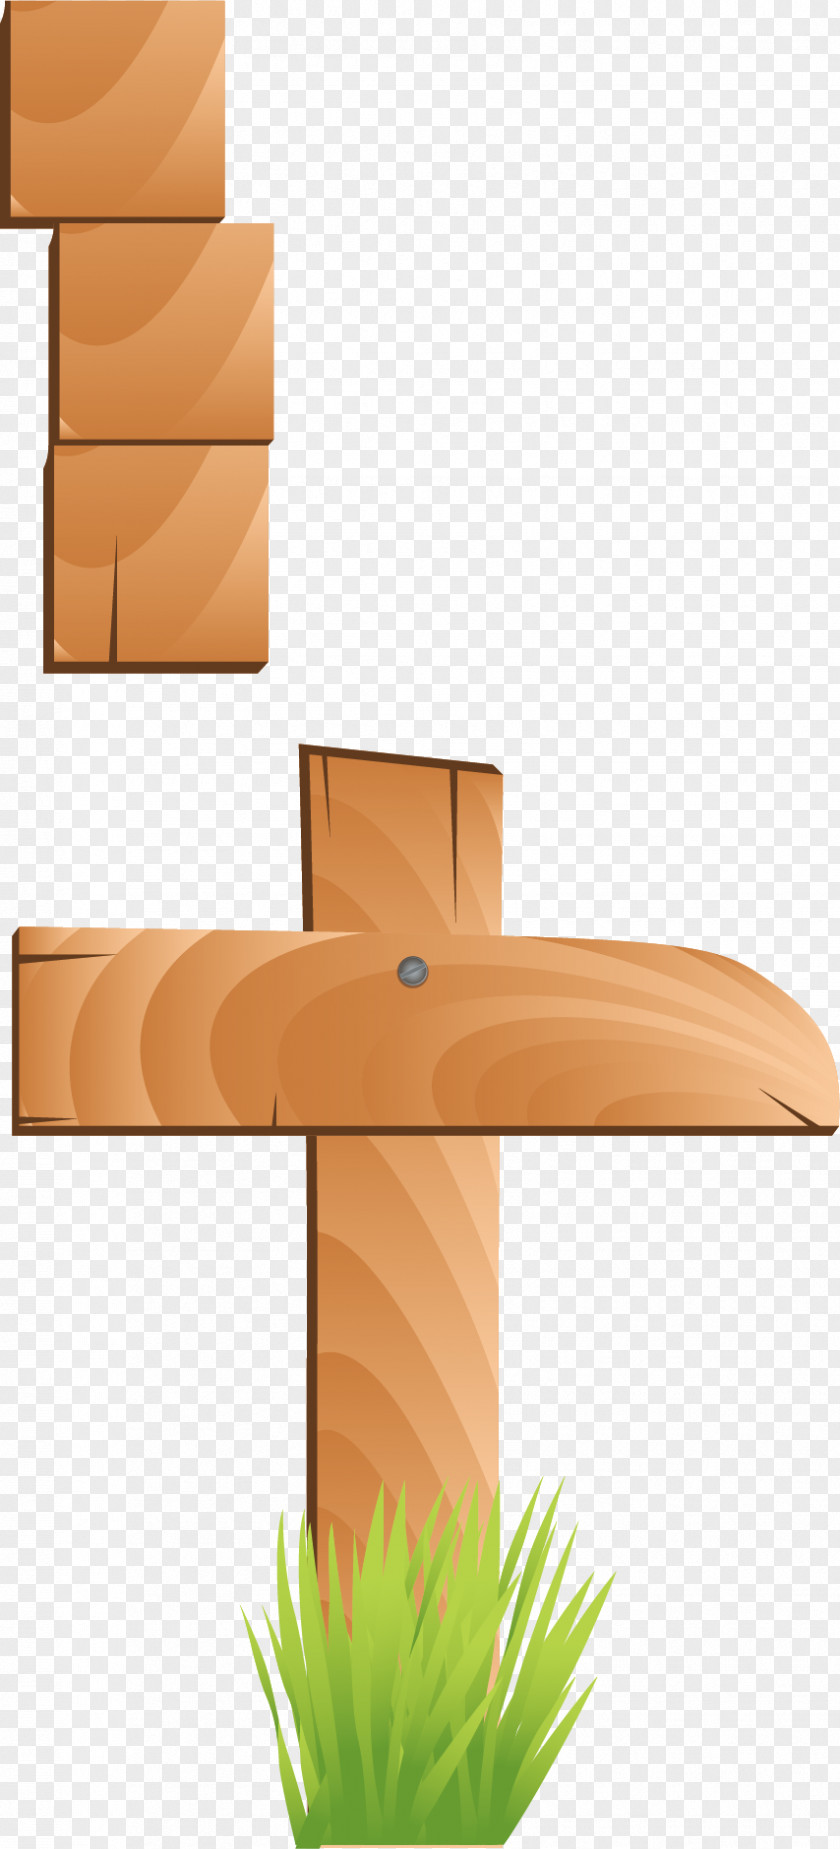 Wood Grain Position Sign Euclidean Vector Element PNG